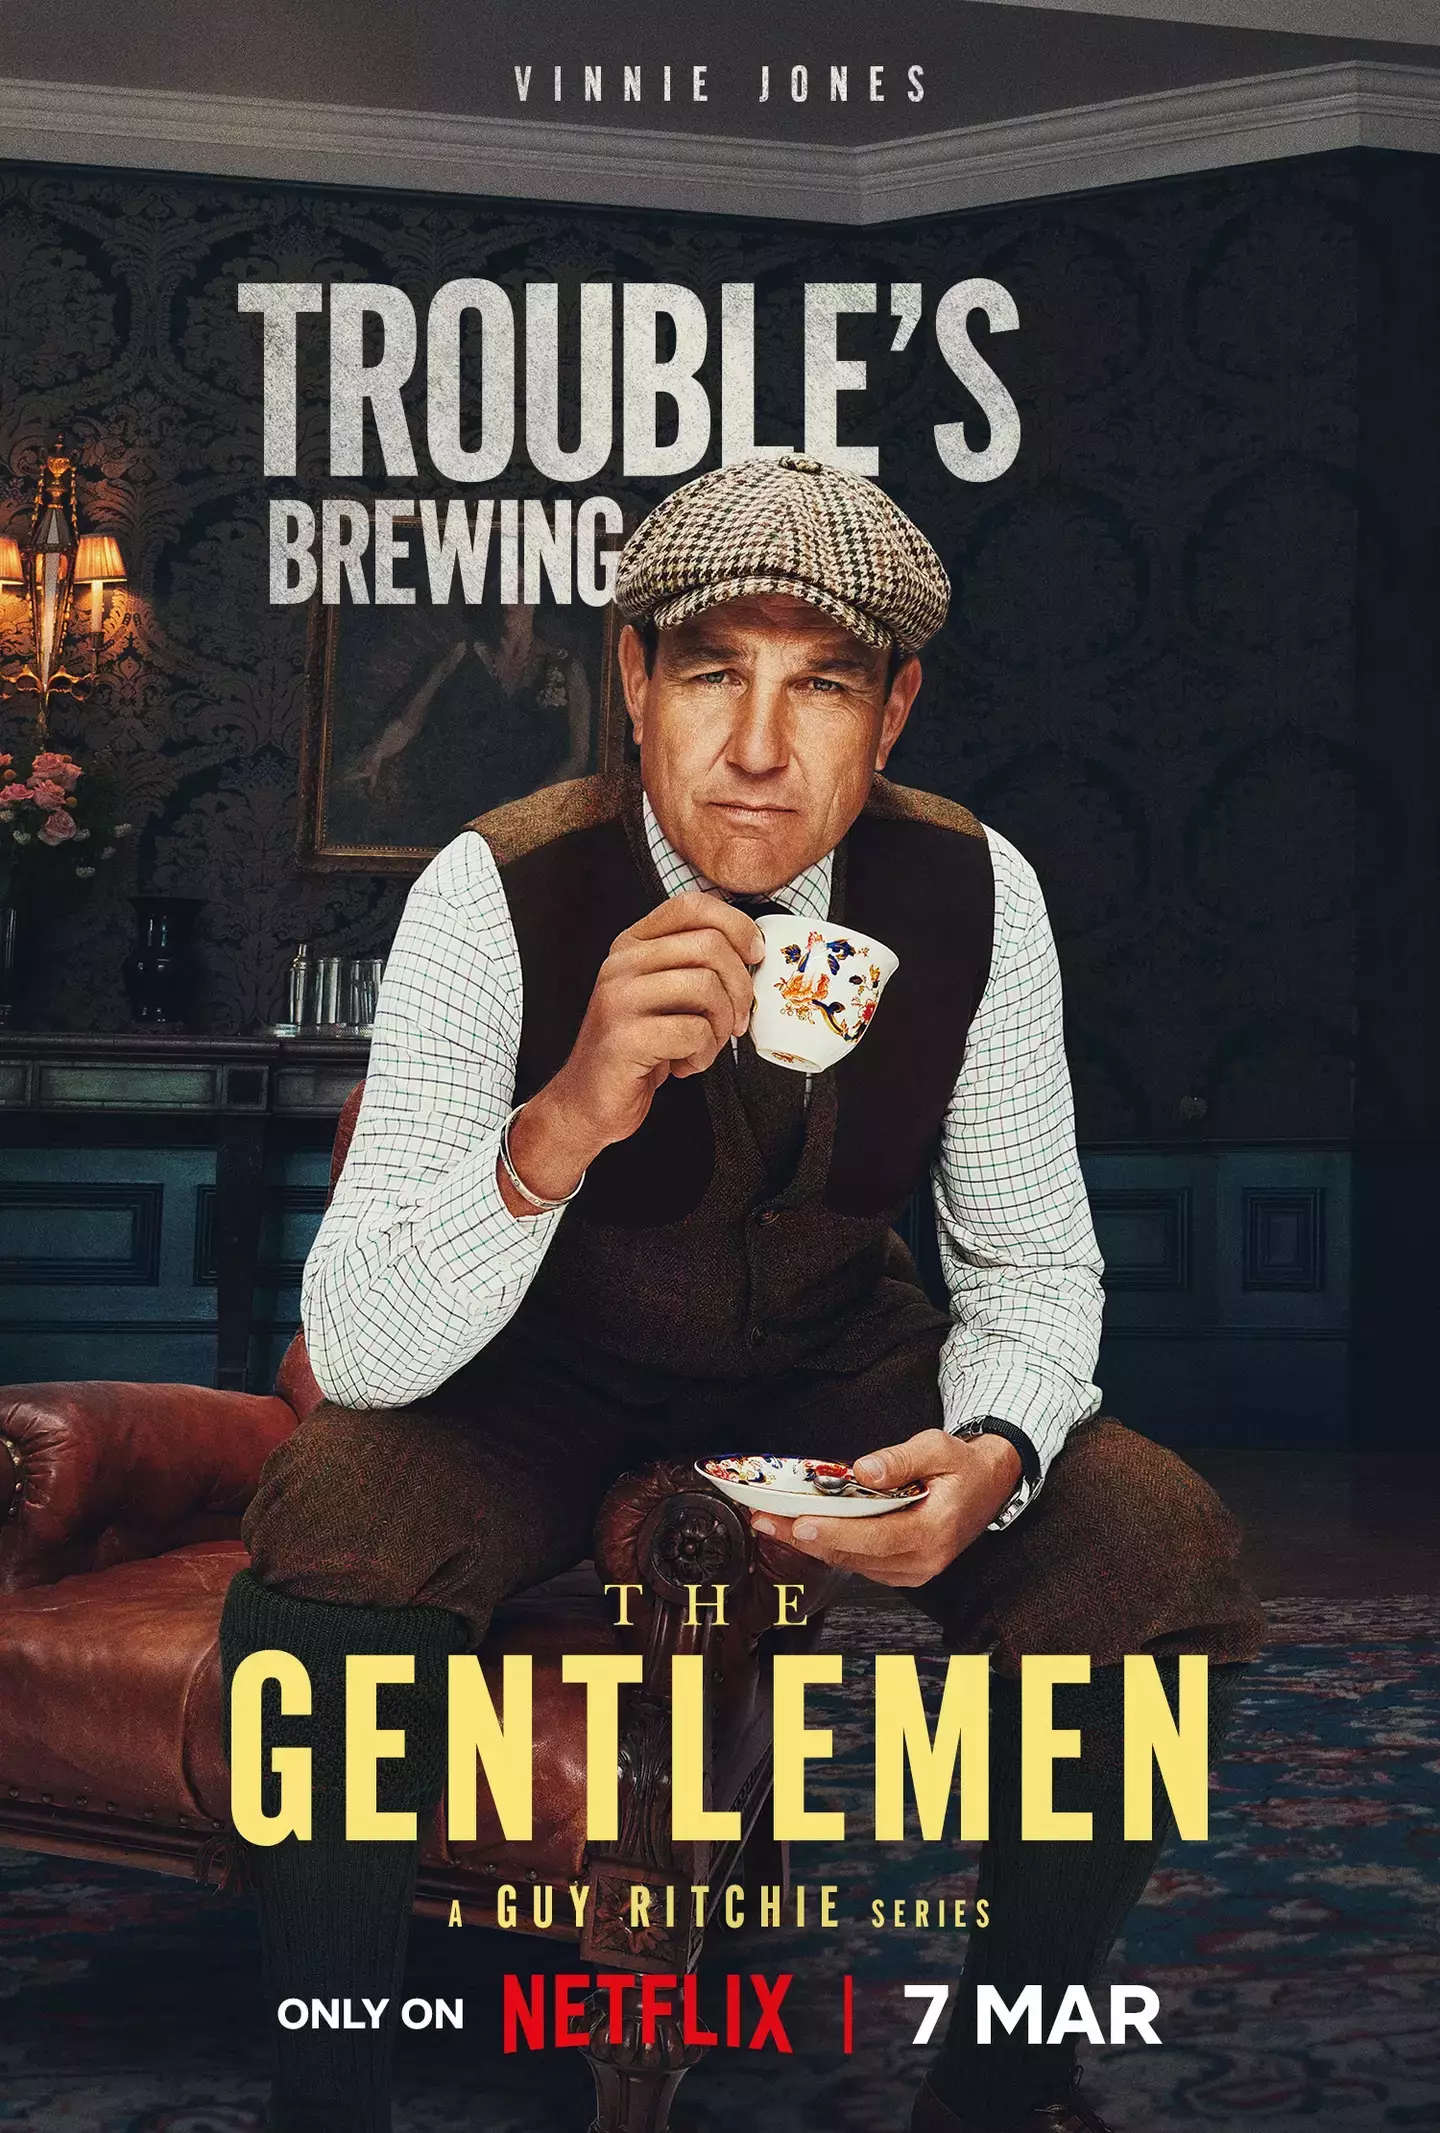 The actor recently featured in Guy Ritchie's new series, The Gentlemen.